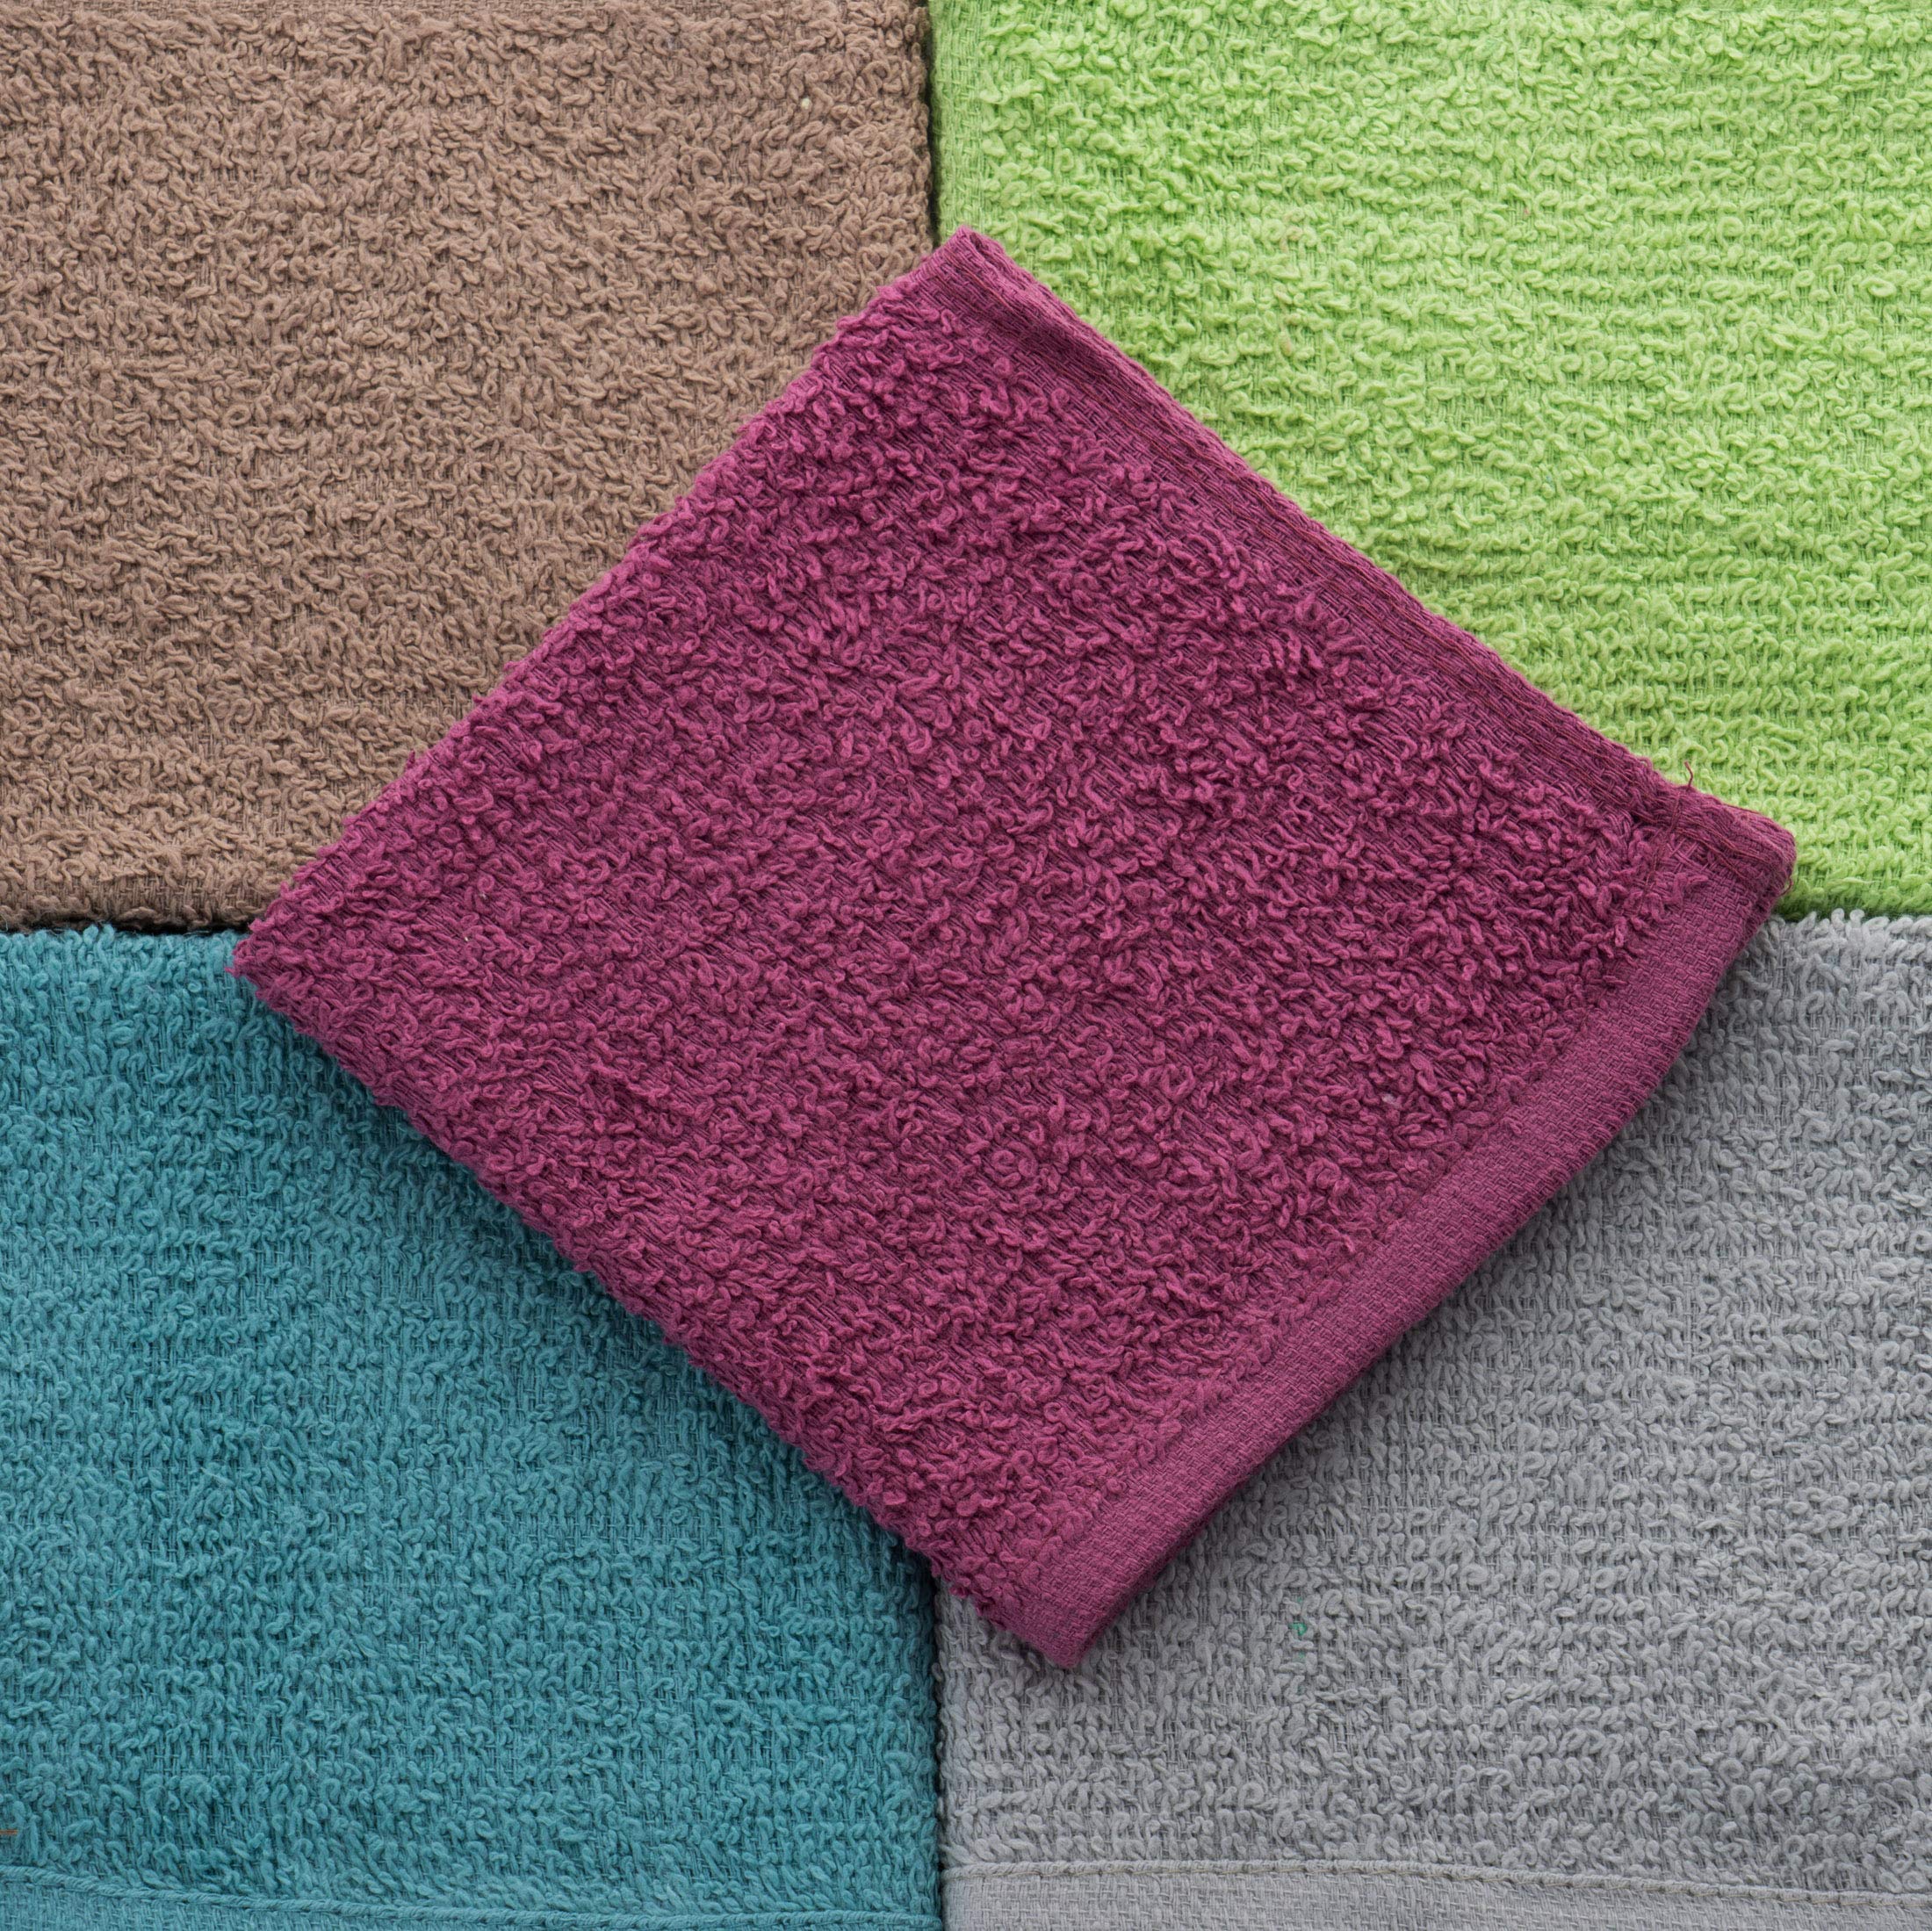 Simpli-Magic Cotton Washcloths, Multi Color Towel Set (400 Pack Full Case)